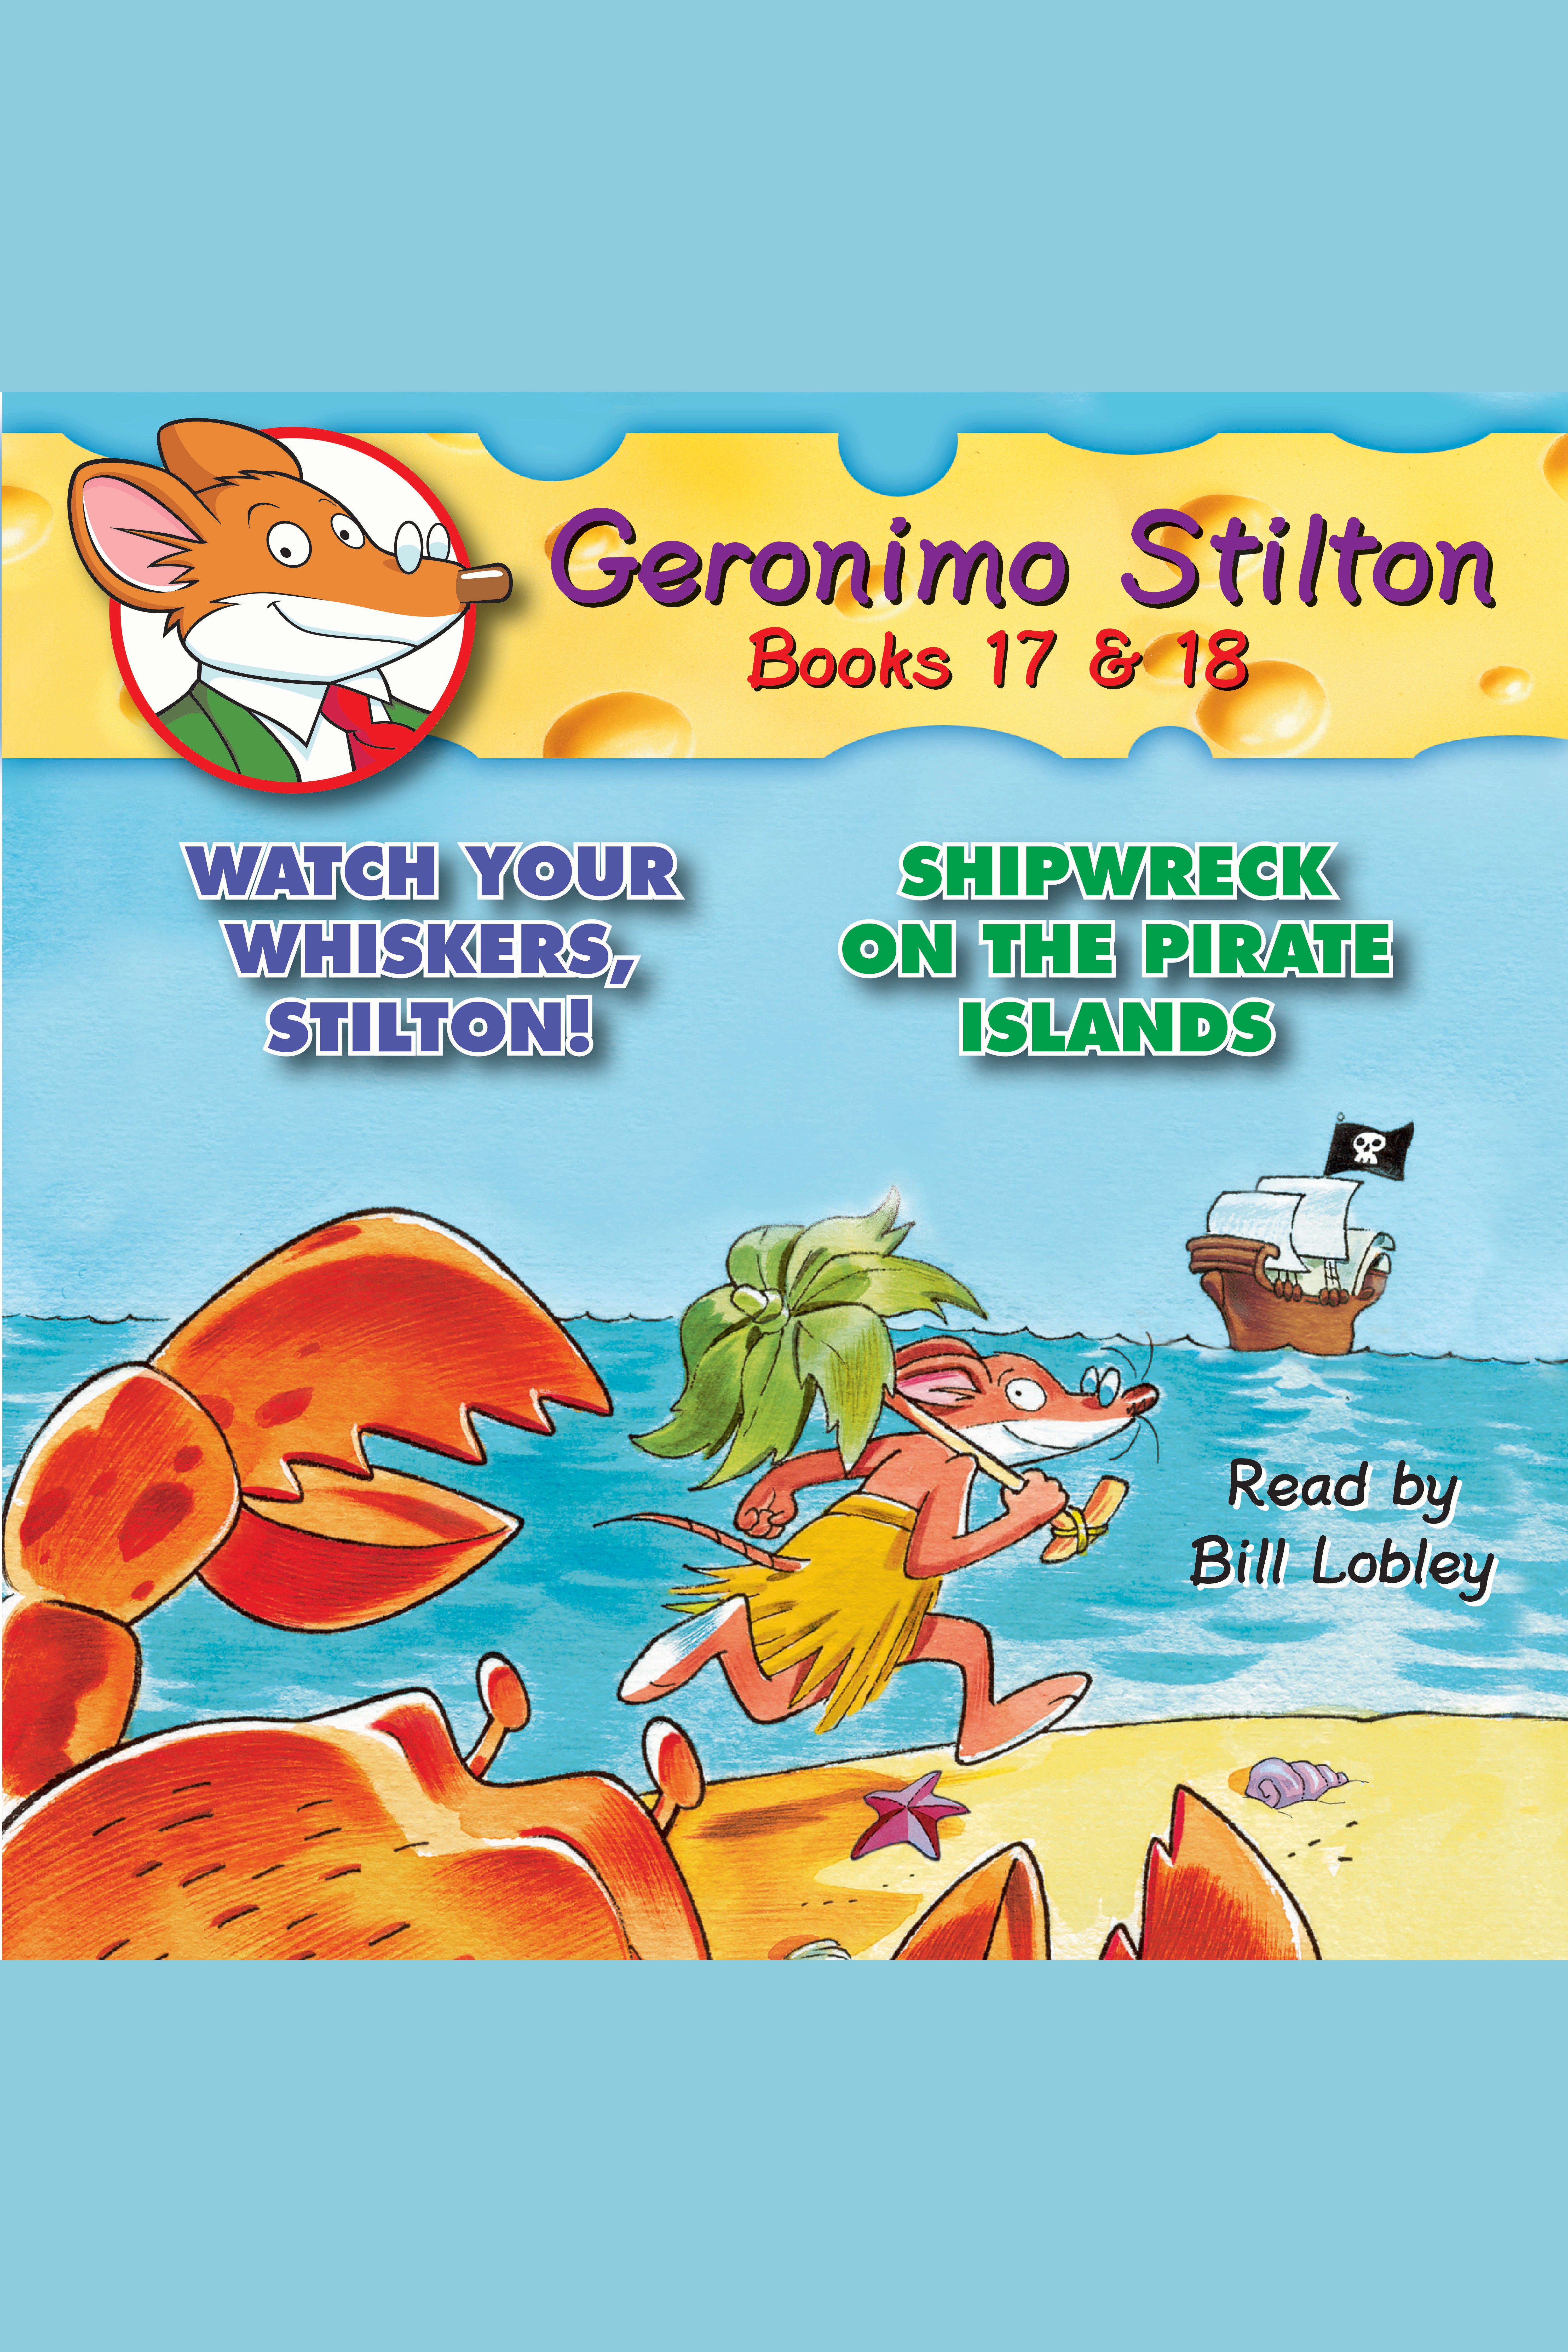 Geronimo Stilton: Books 17 & 18 cover image